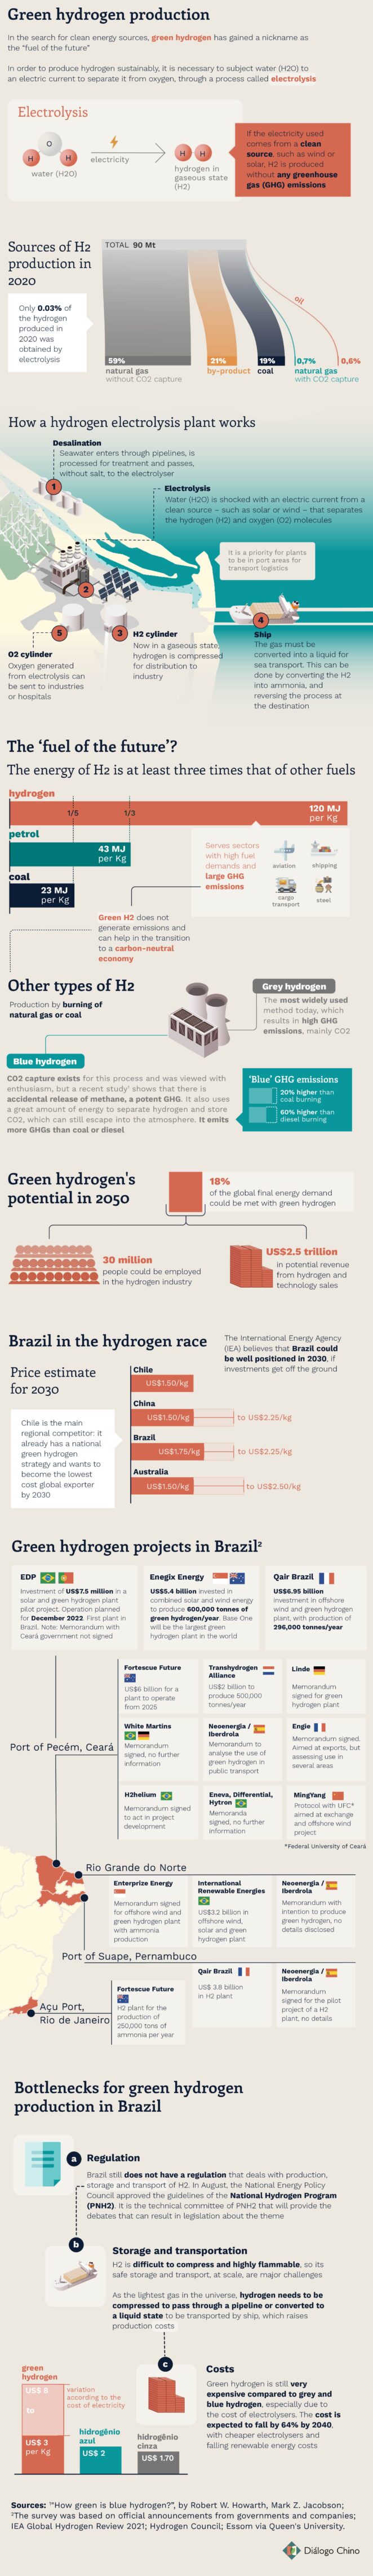 Green hydrogen infographic